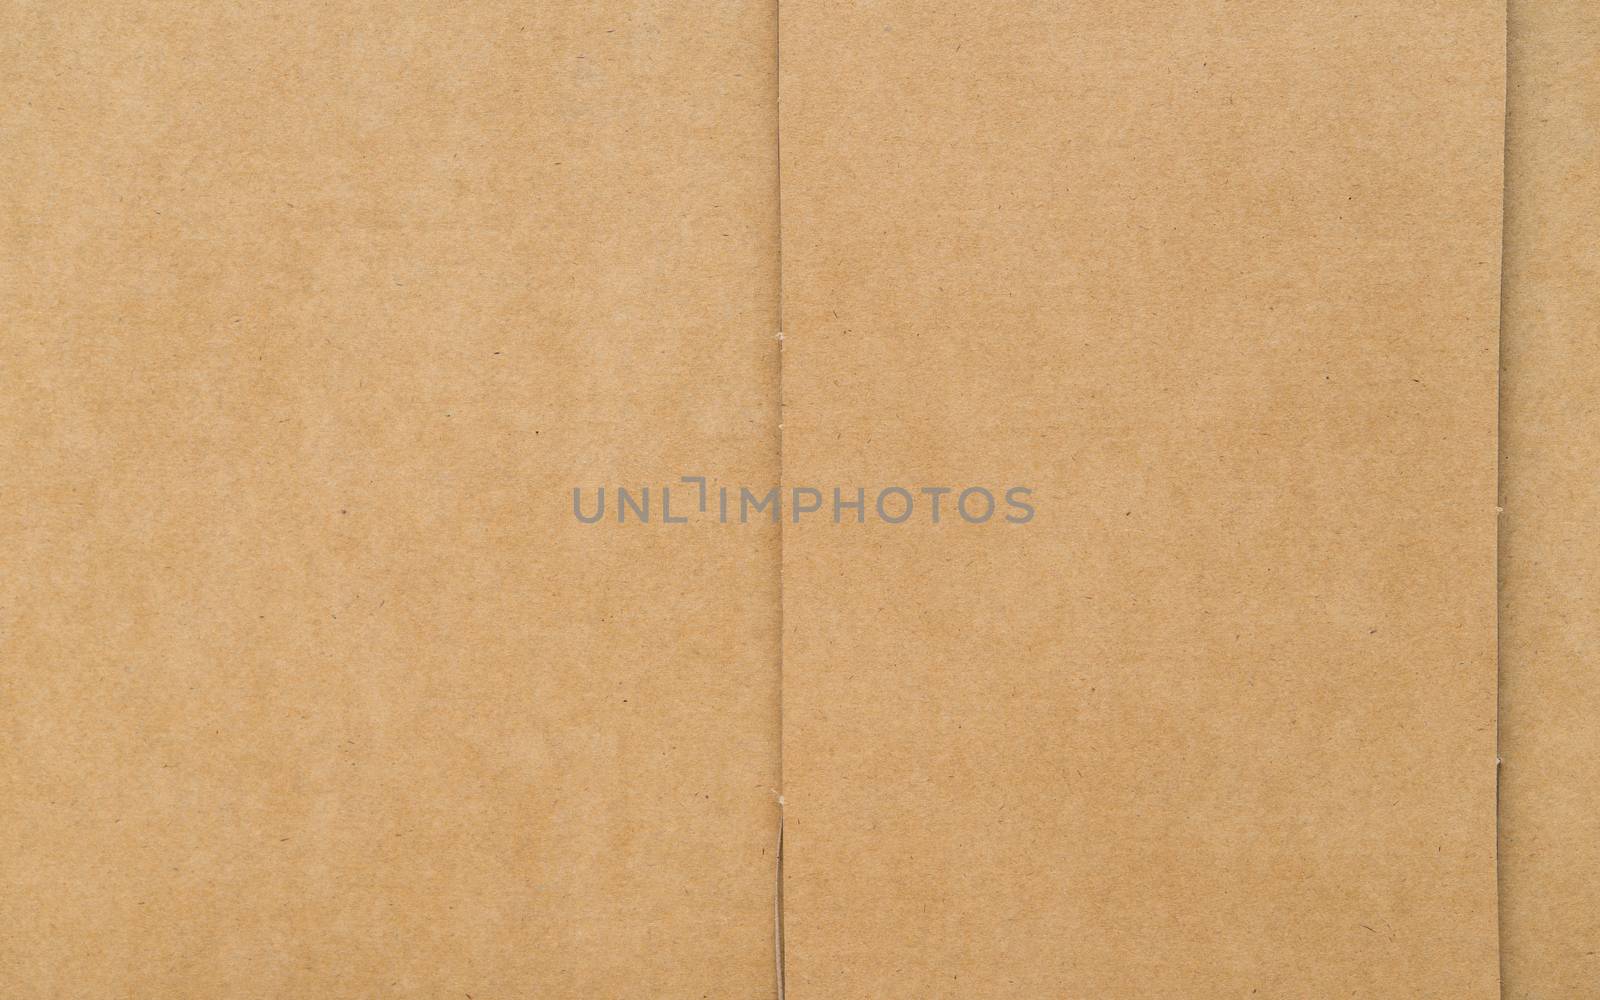 cardboard texture, brown paper background by antpkr